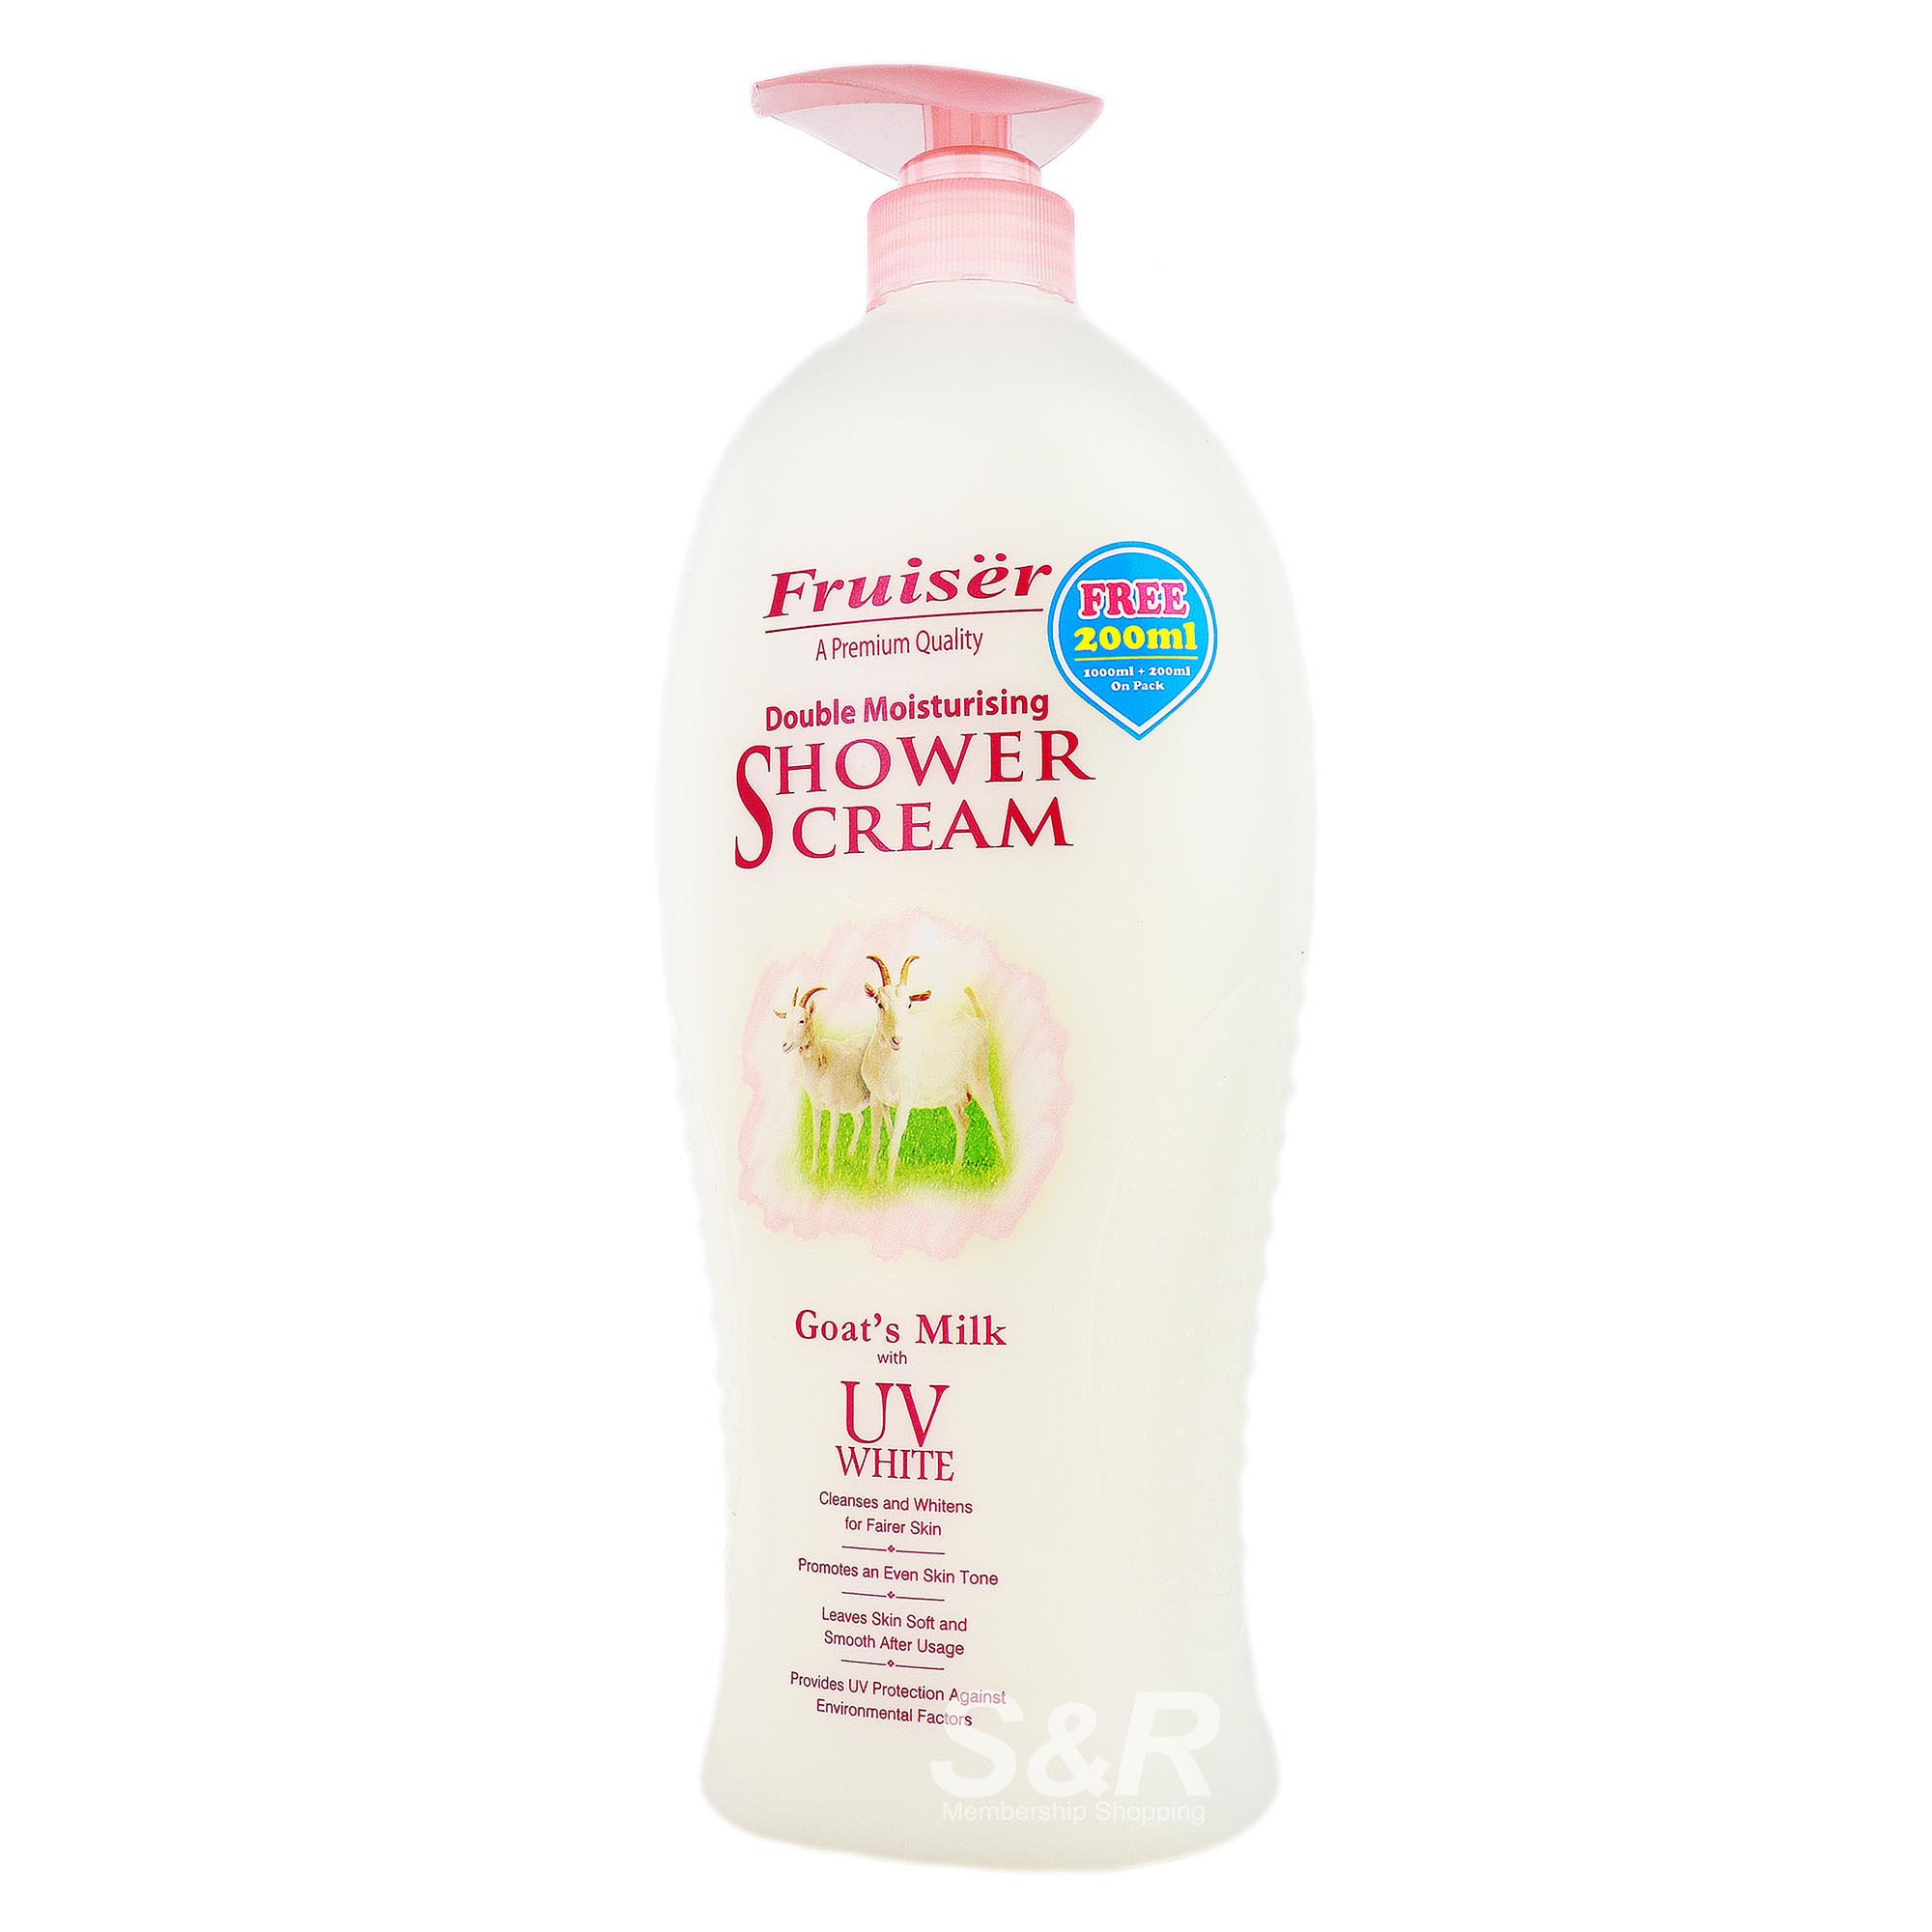 Double Moisturising Shower Cream